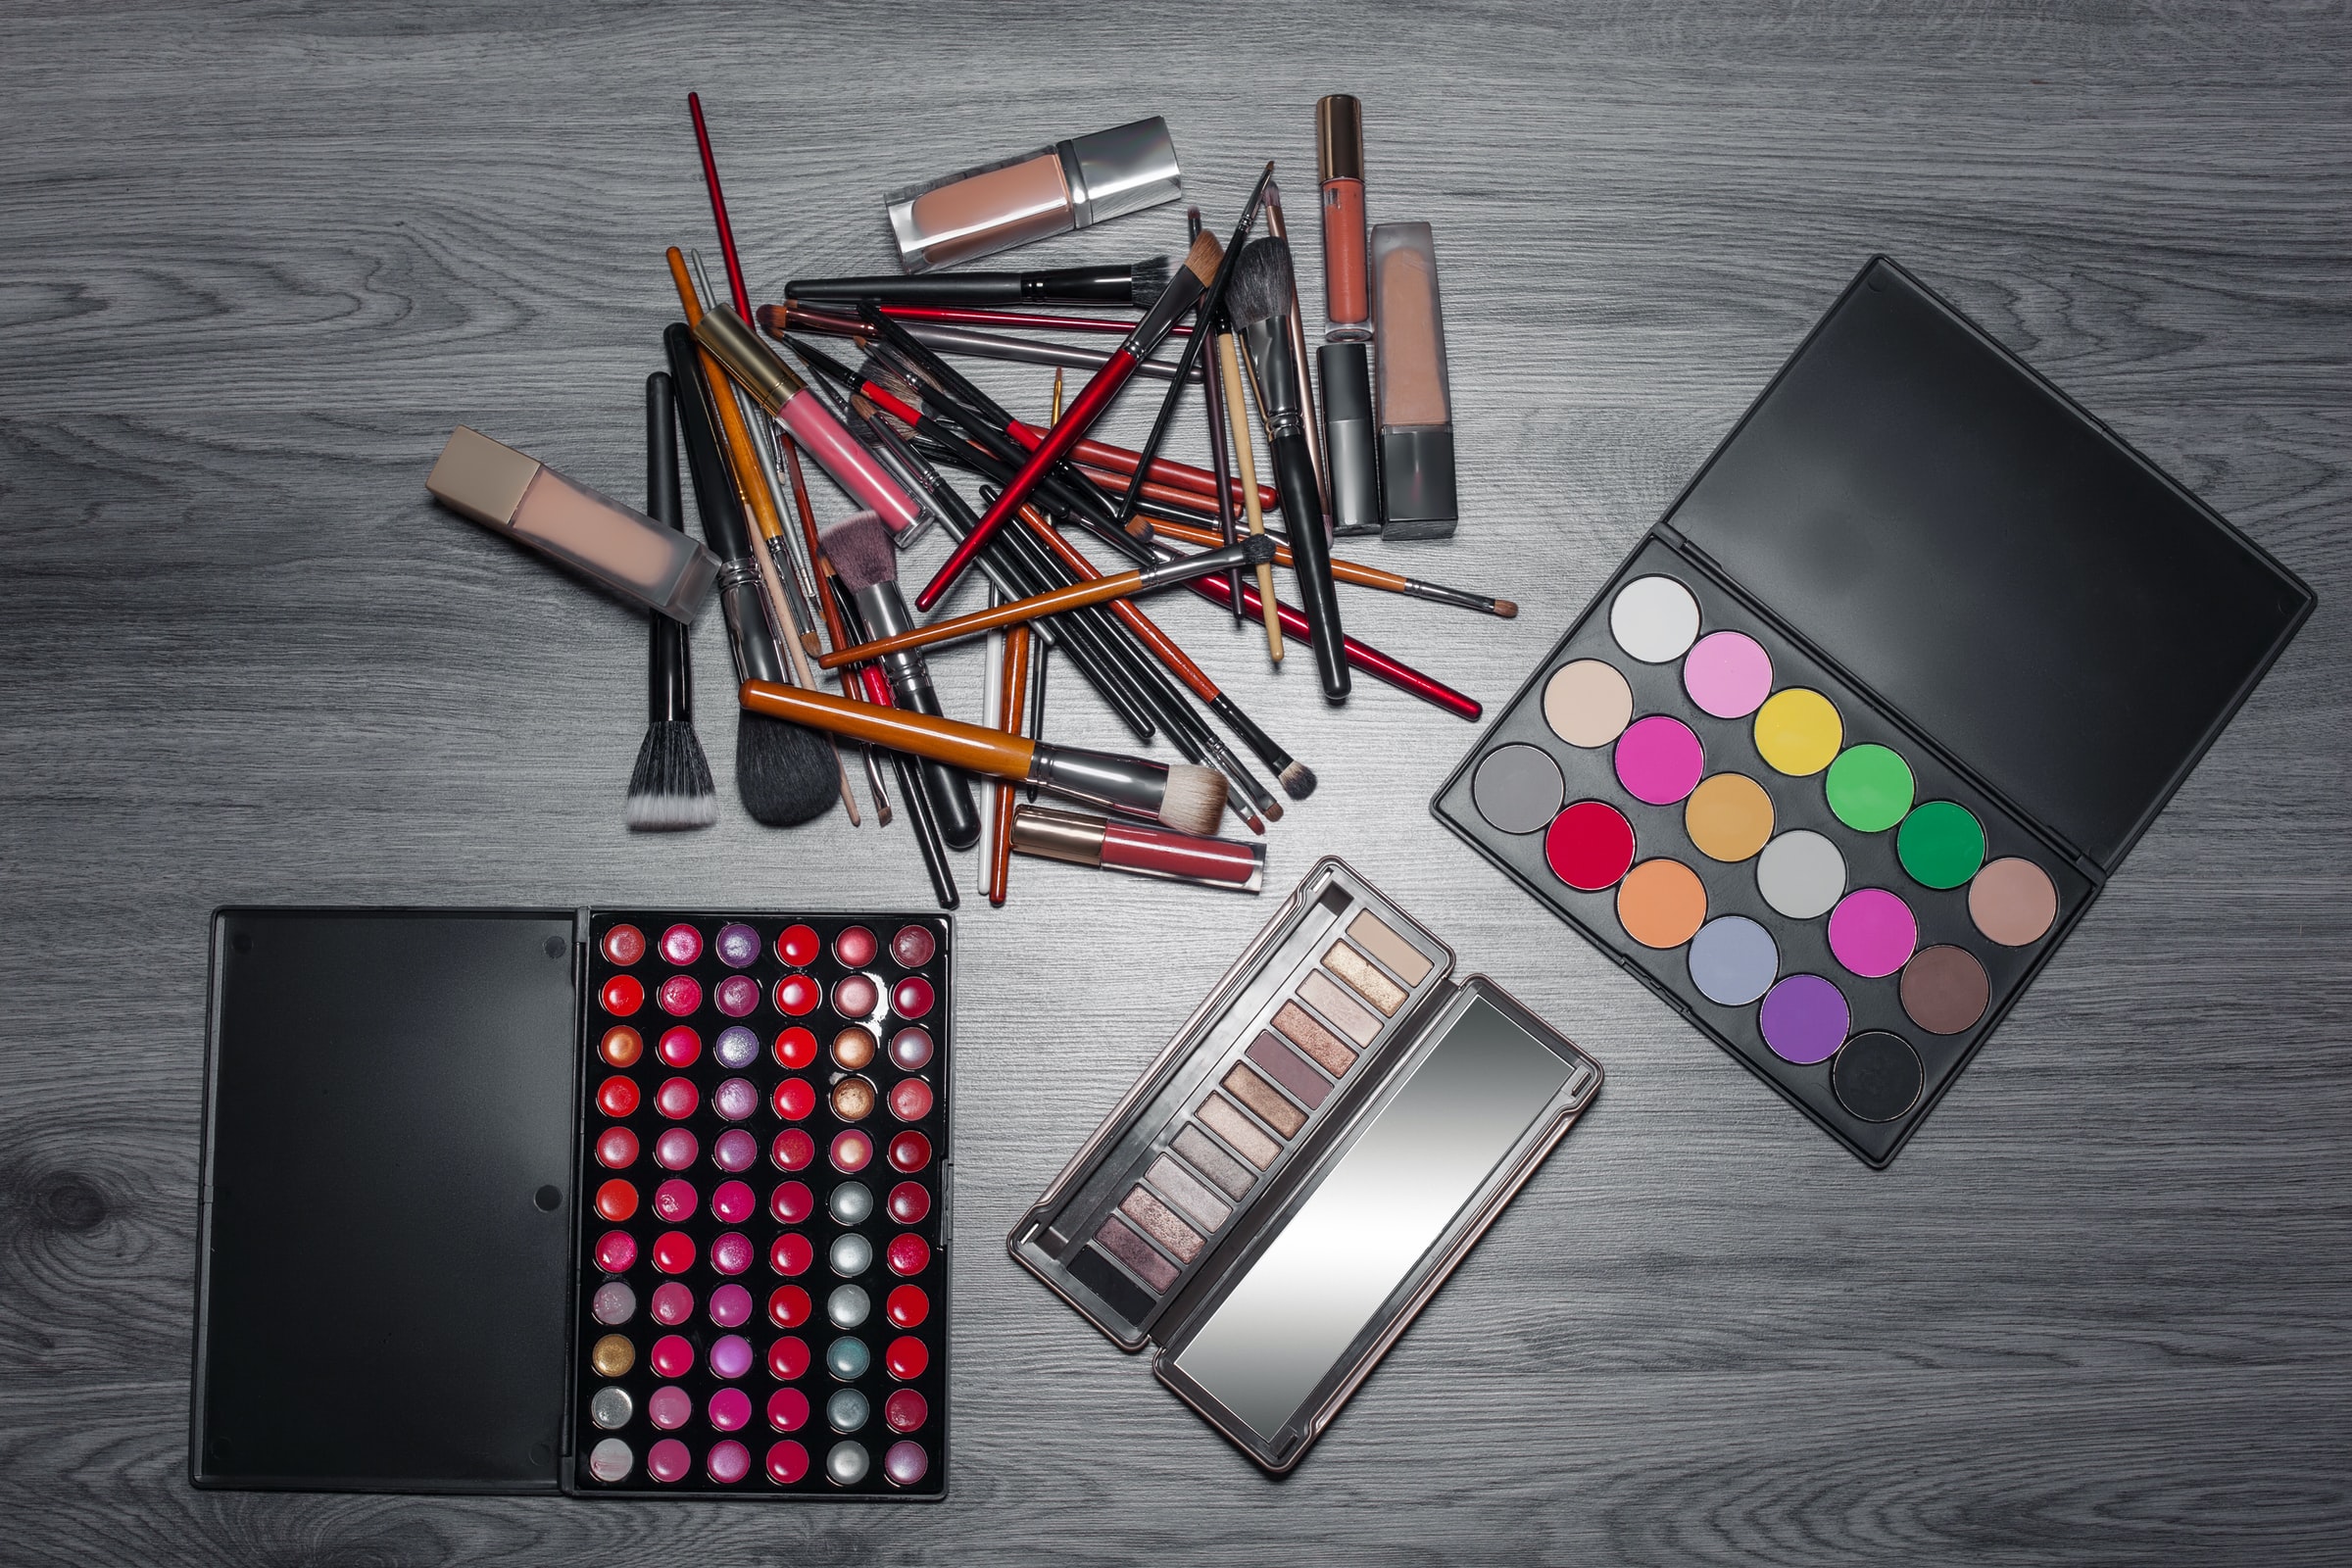 The Best Makeup Kits of 2021 - Top Makeup Gift Sets